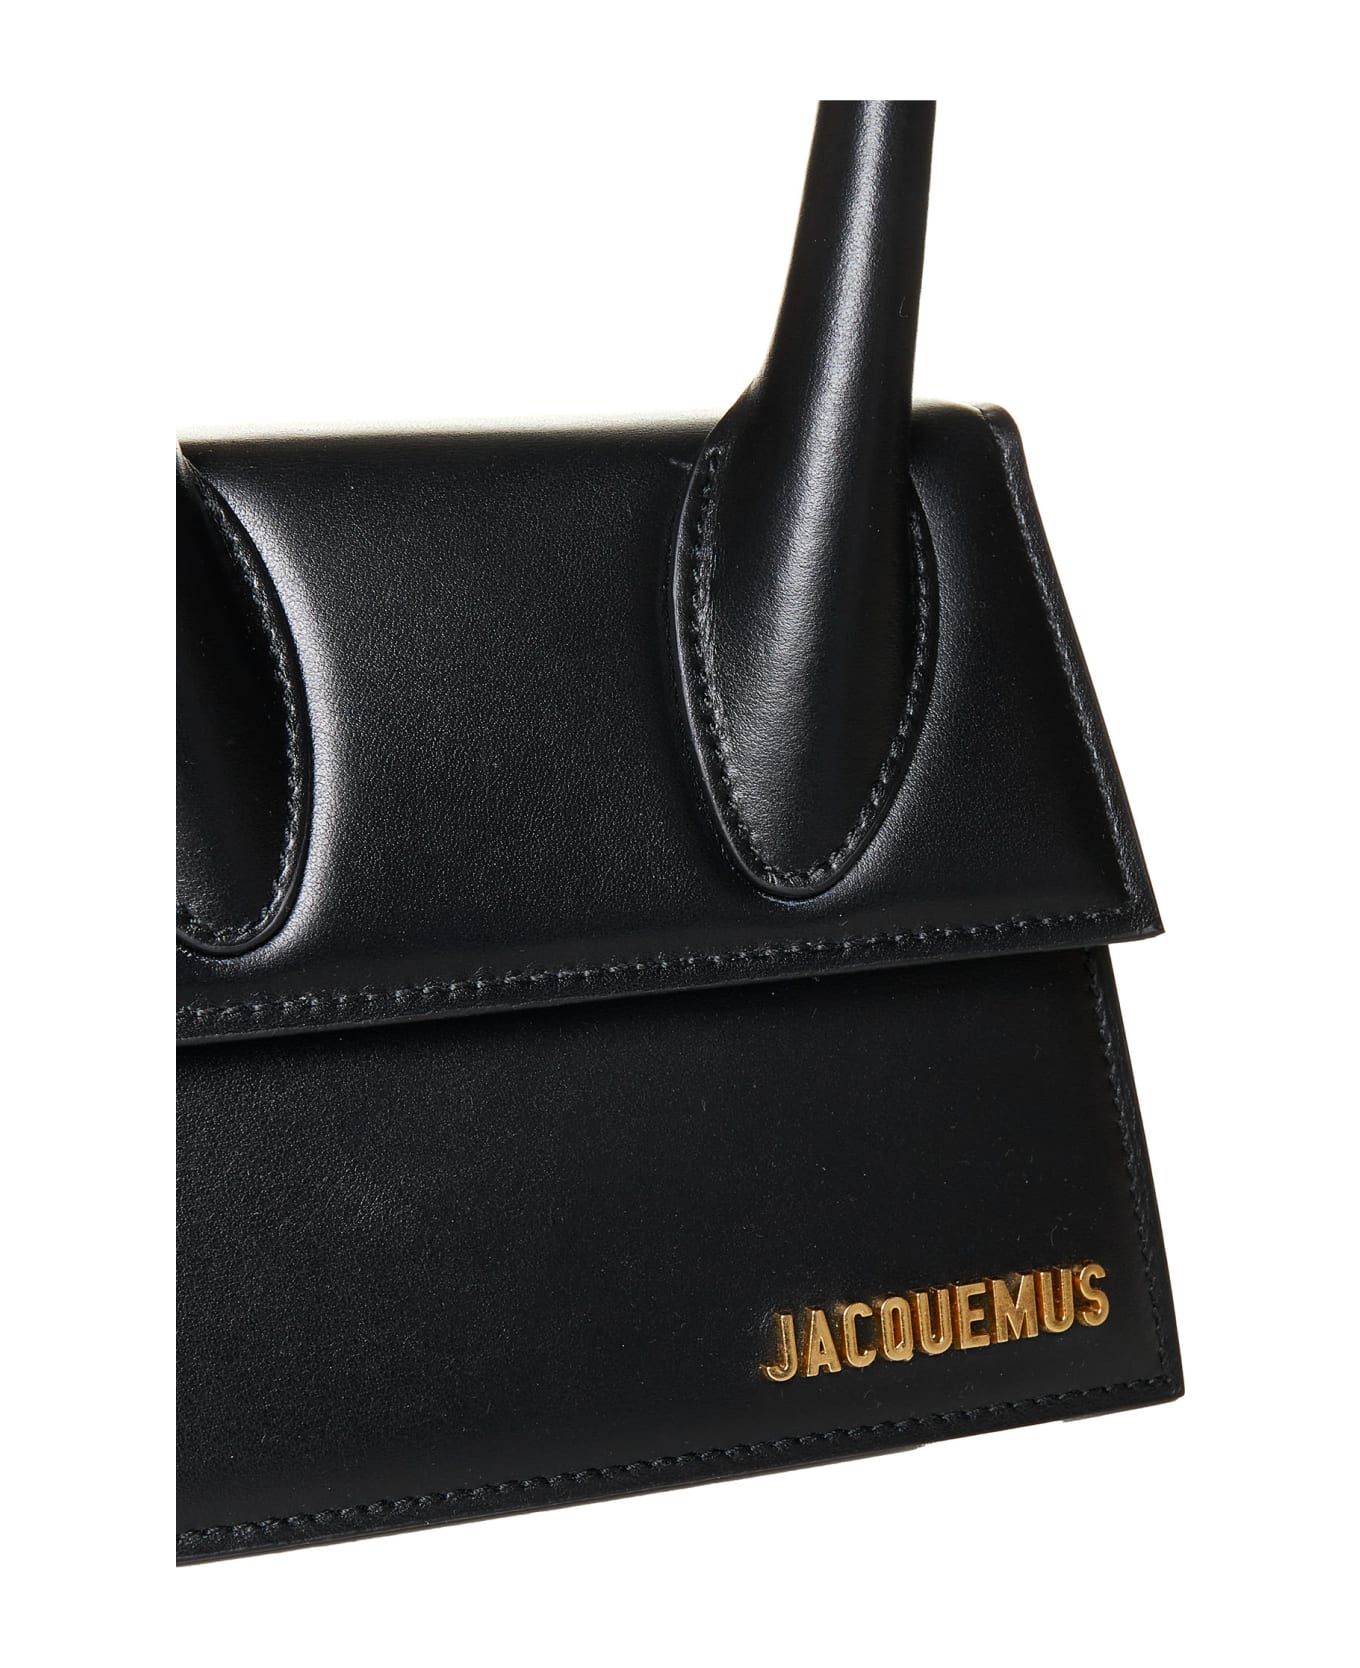 Jacquemus Le Chiquito Handbag - Black トートバッグ